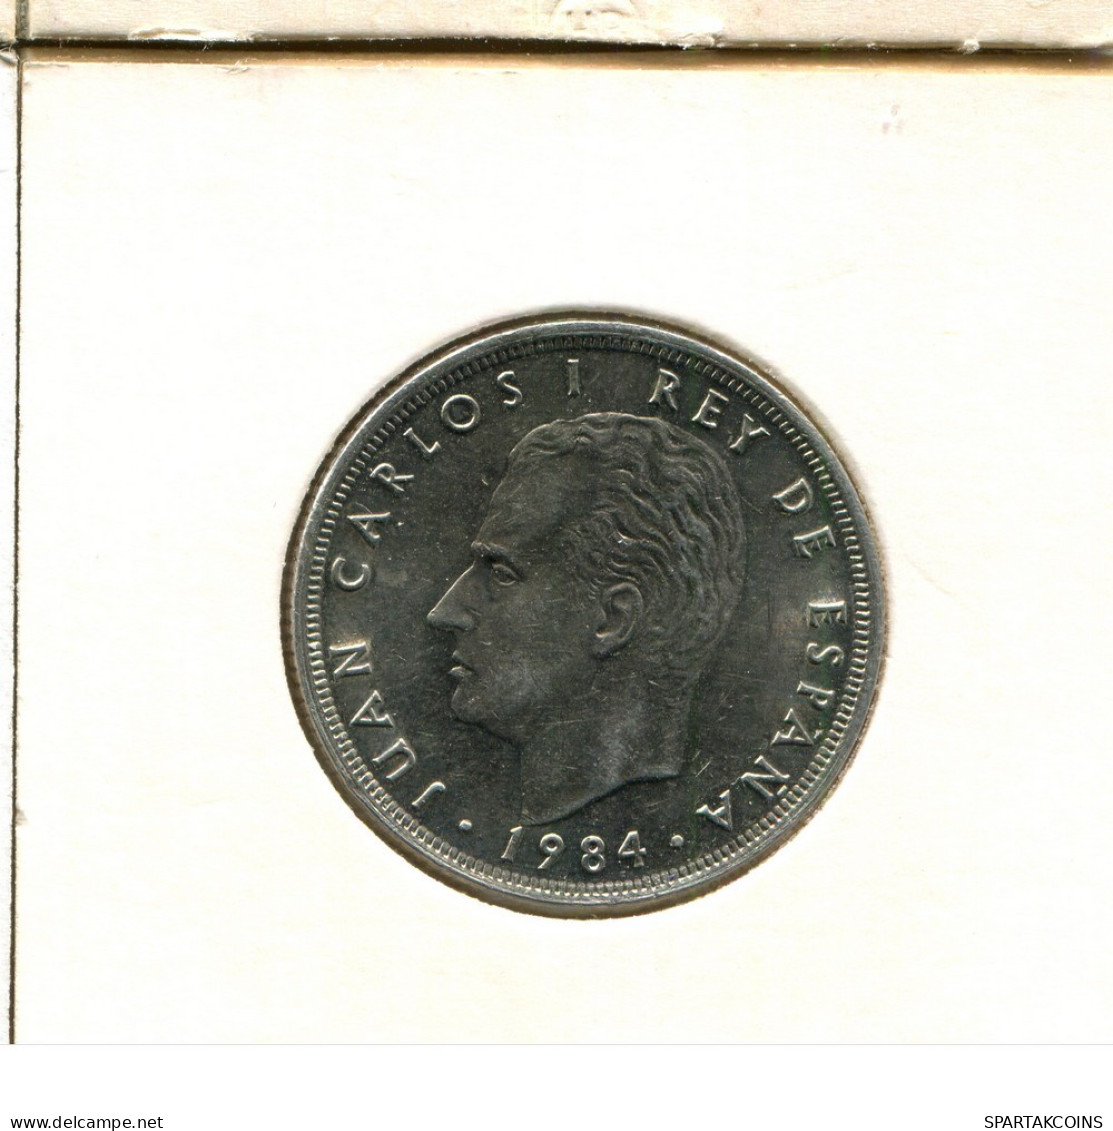 25 PESETAS 1984 SPAIN Coin #AT911.U.A - 25 Pesetas